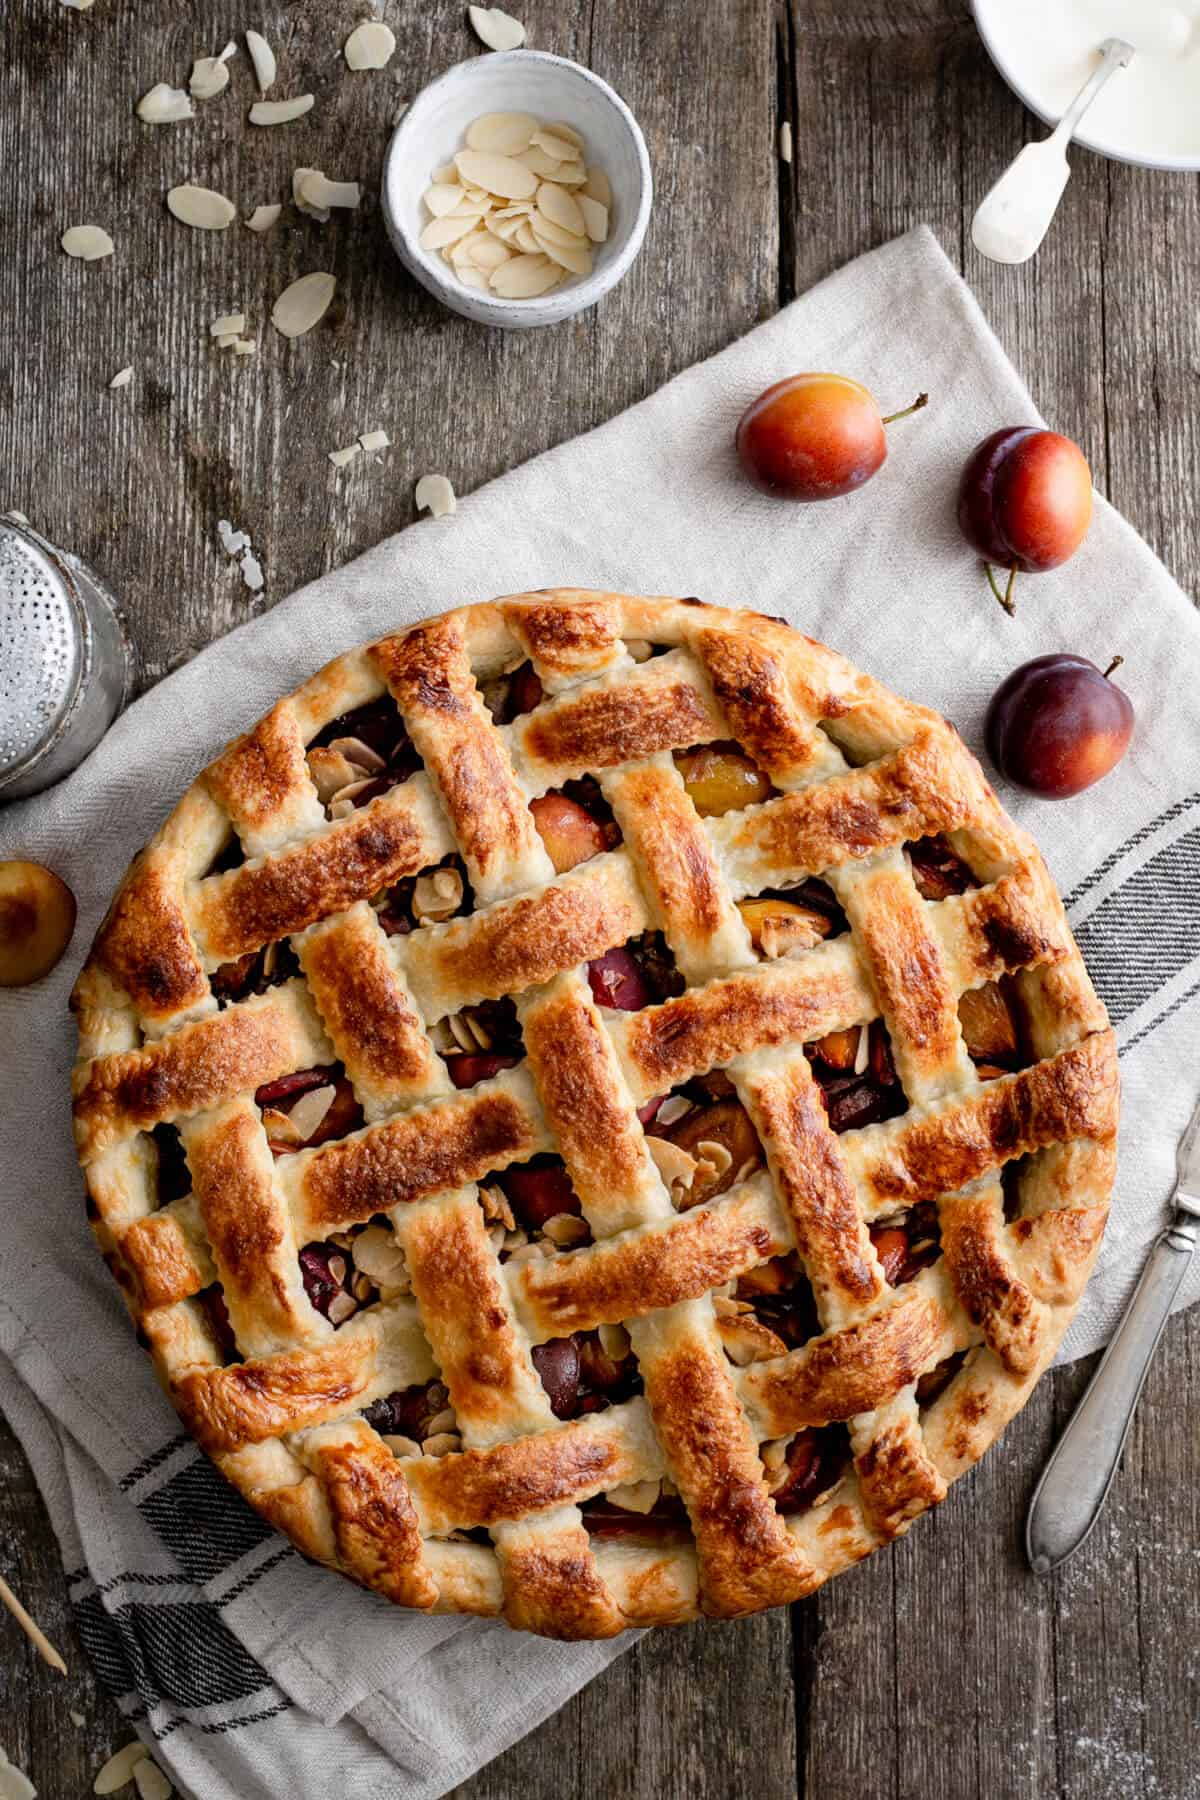 Plum and almond pie with decorative lattice pattern